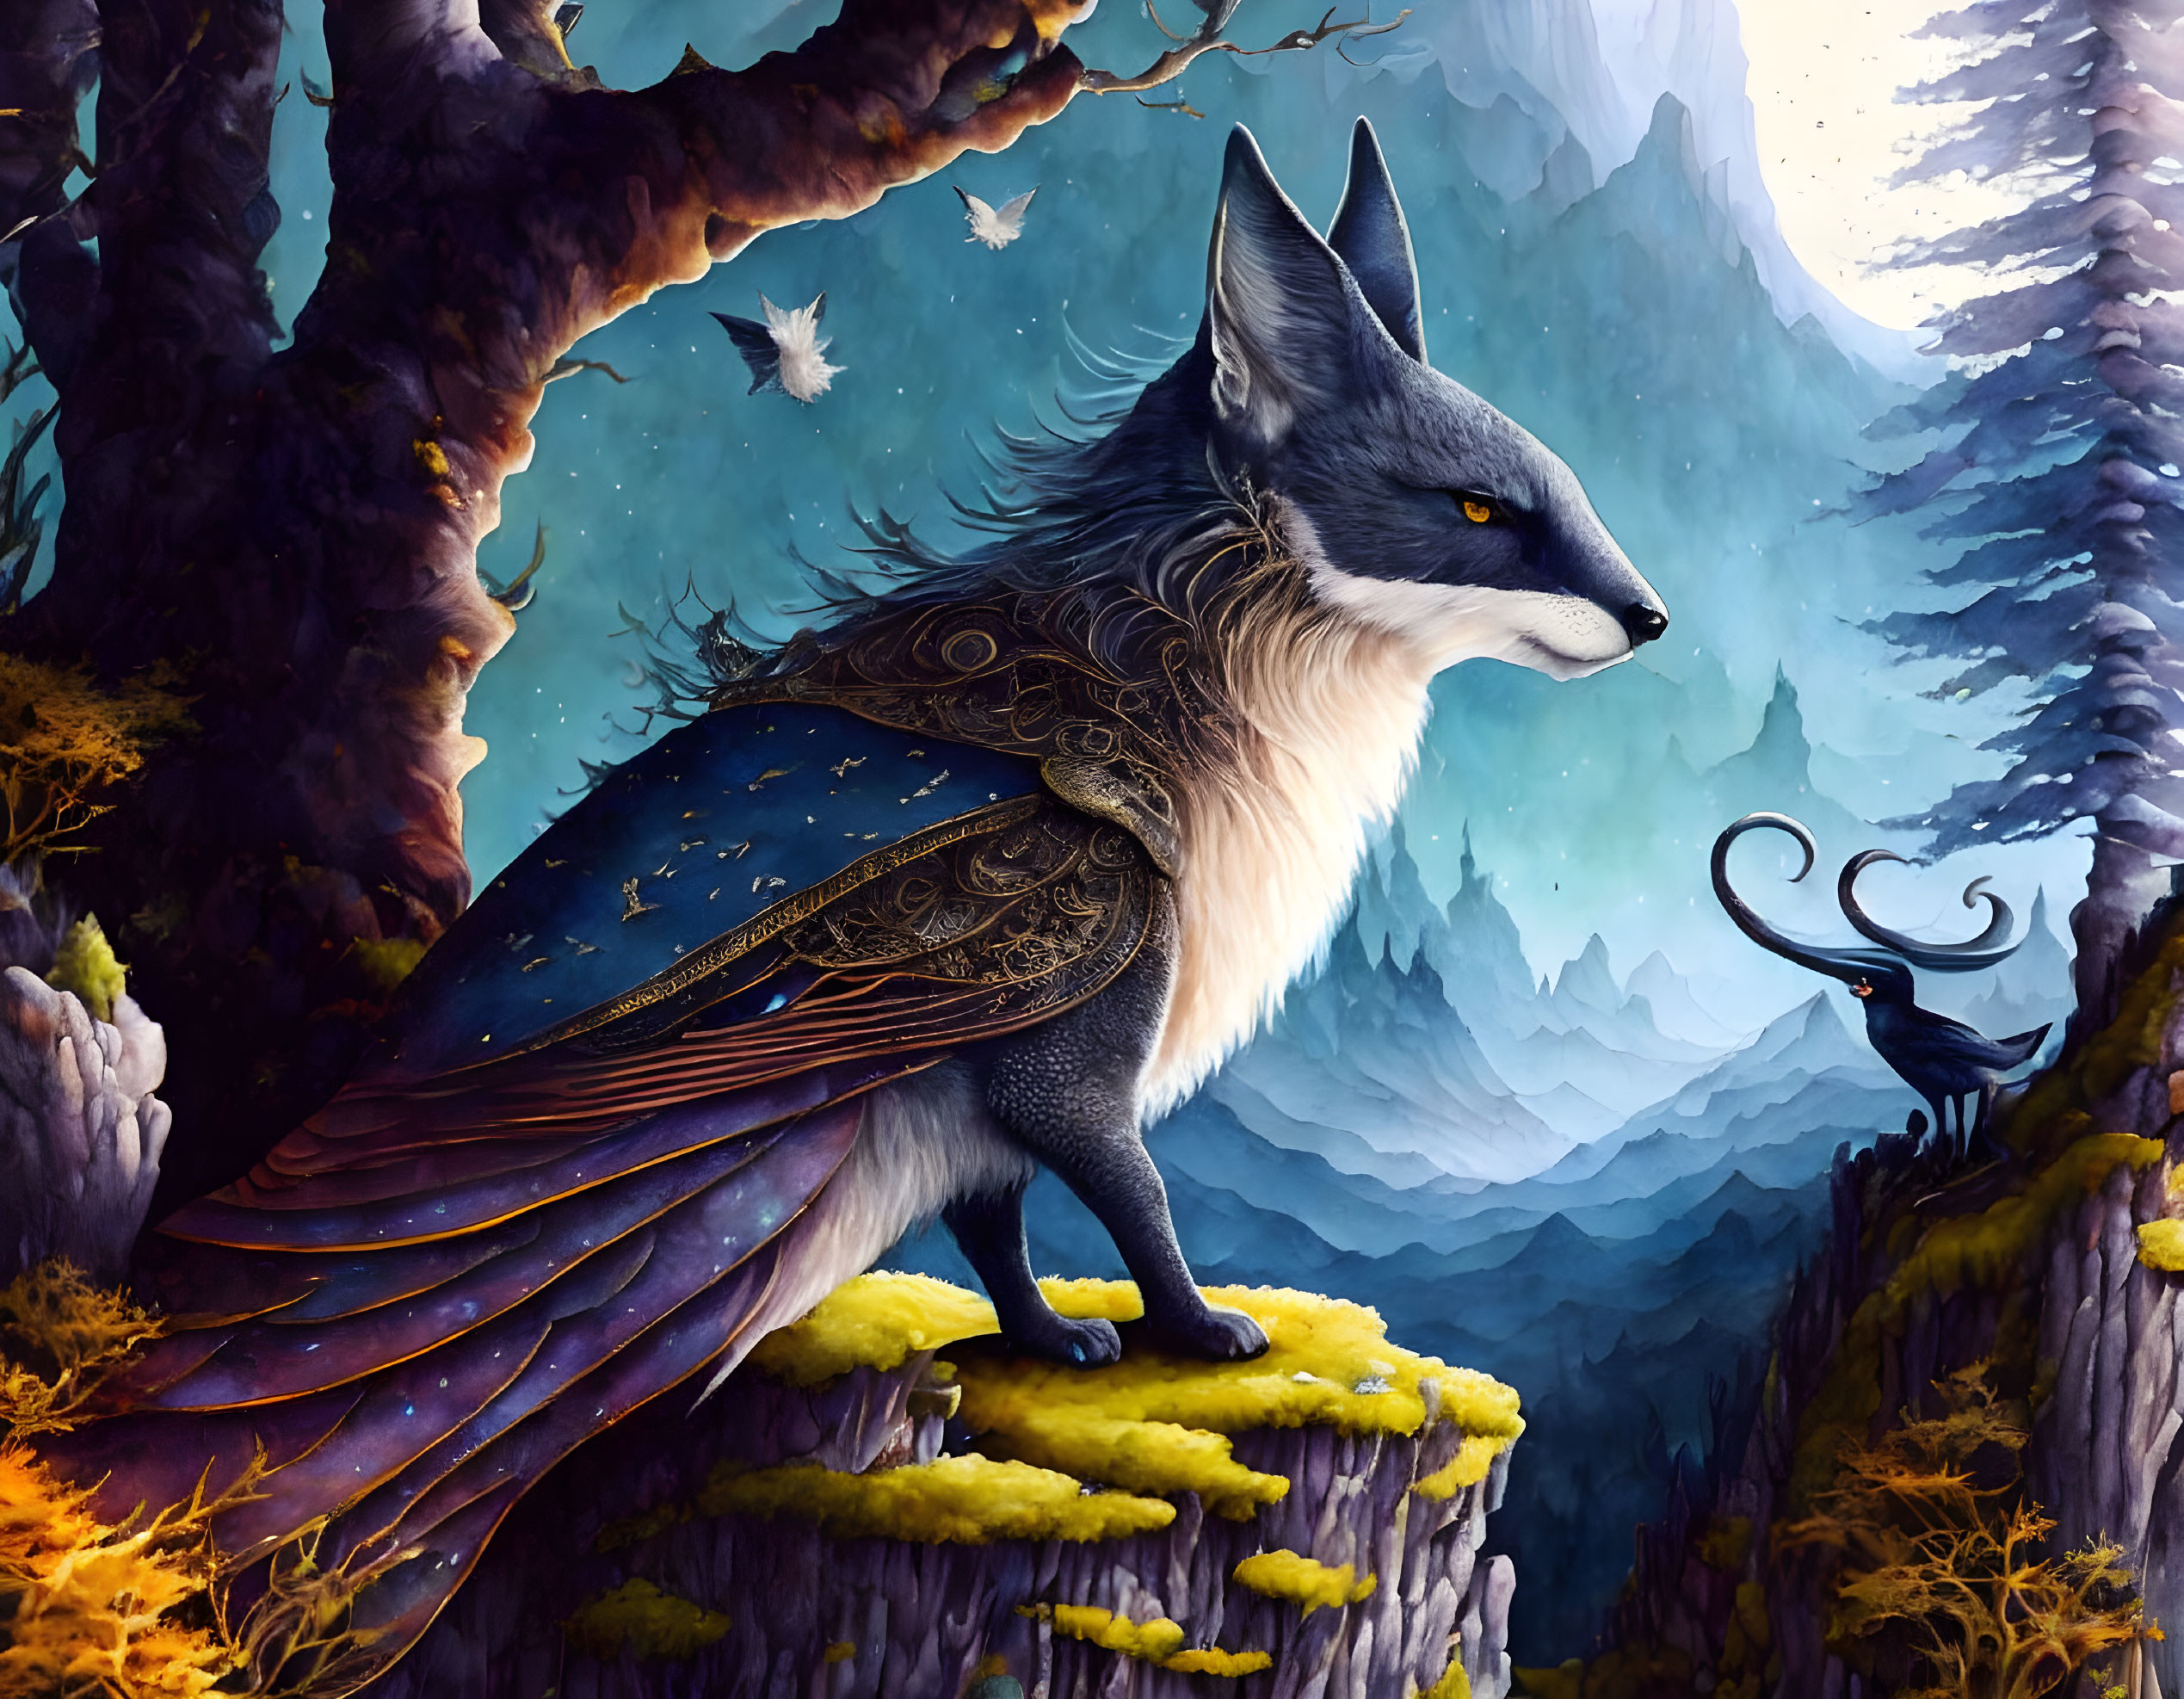  Fantasy animals in fantasy landscape